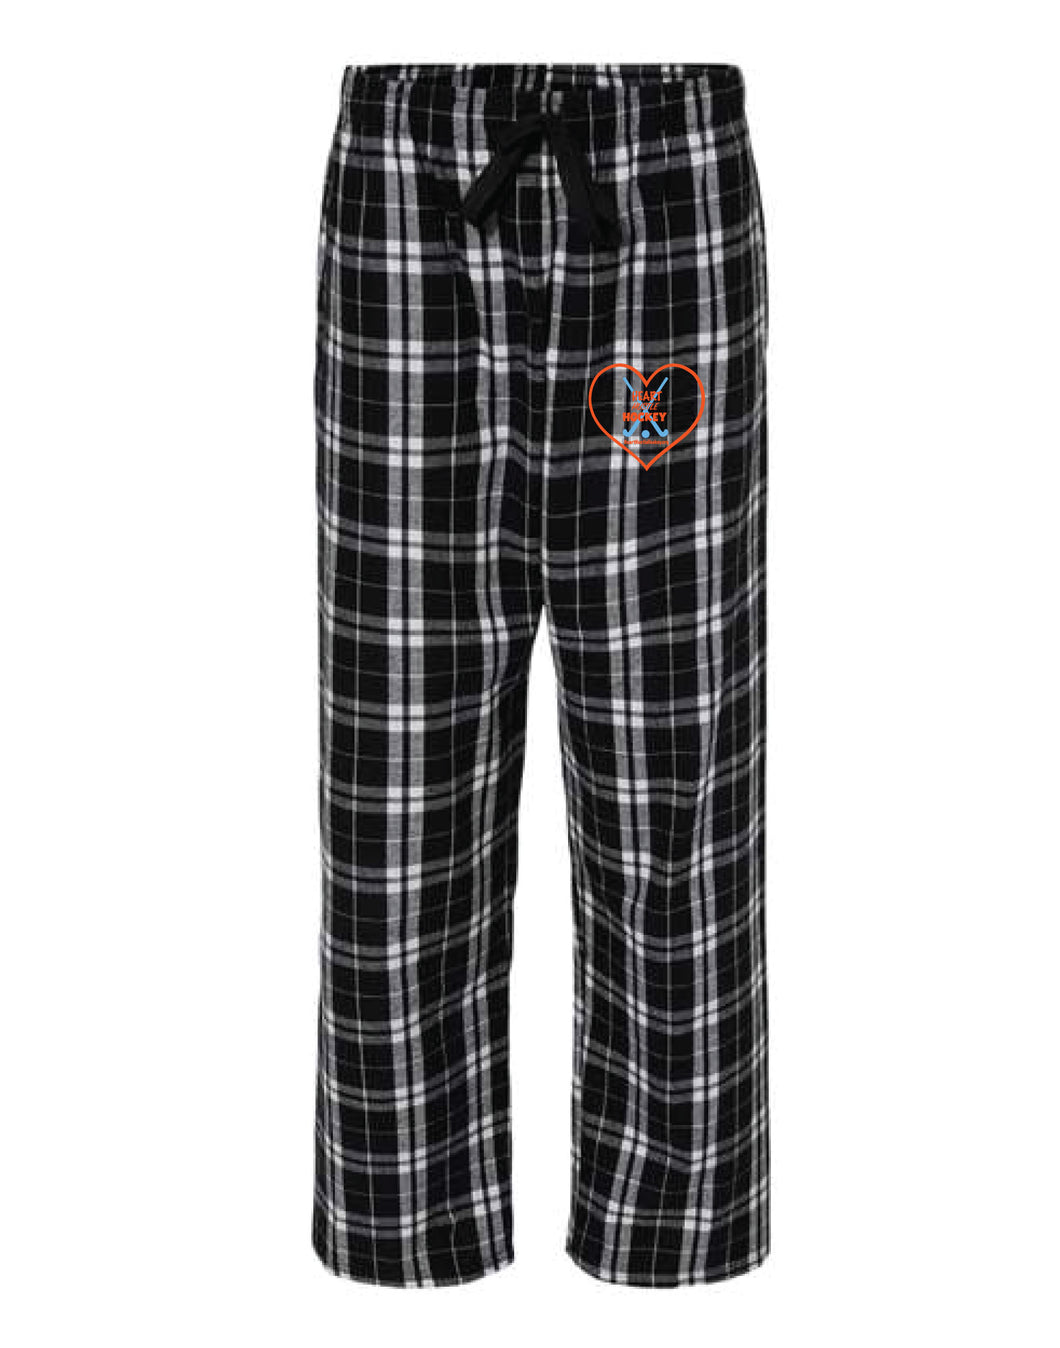 H3 Field Hockey Flannel Pajama Pants - Black/White - 5KounT